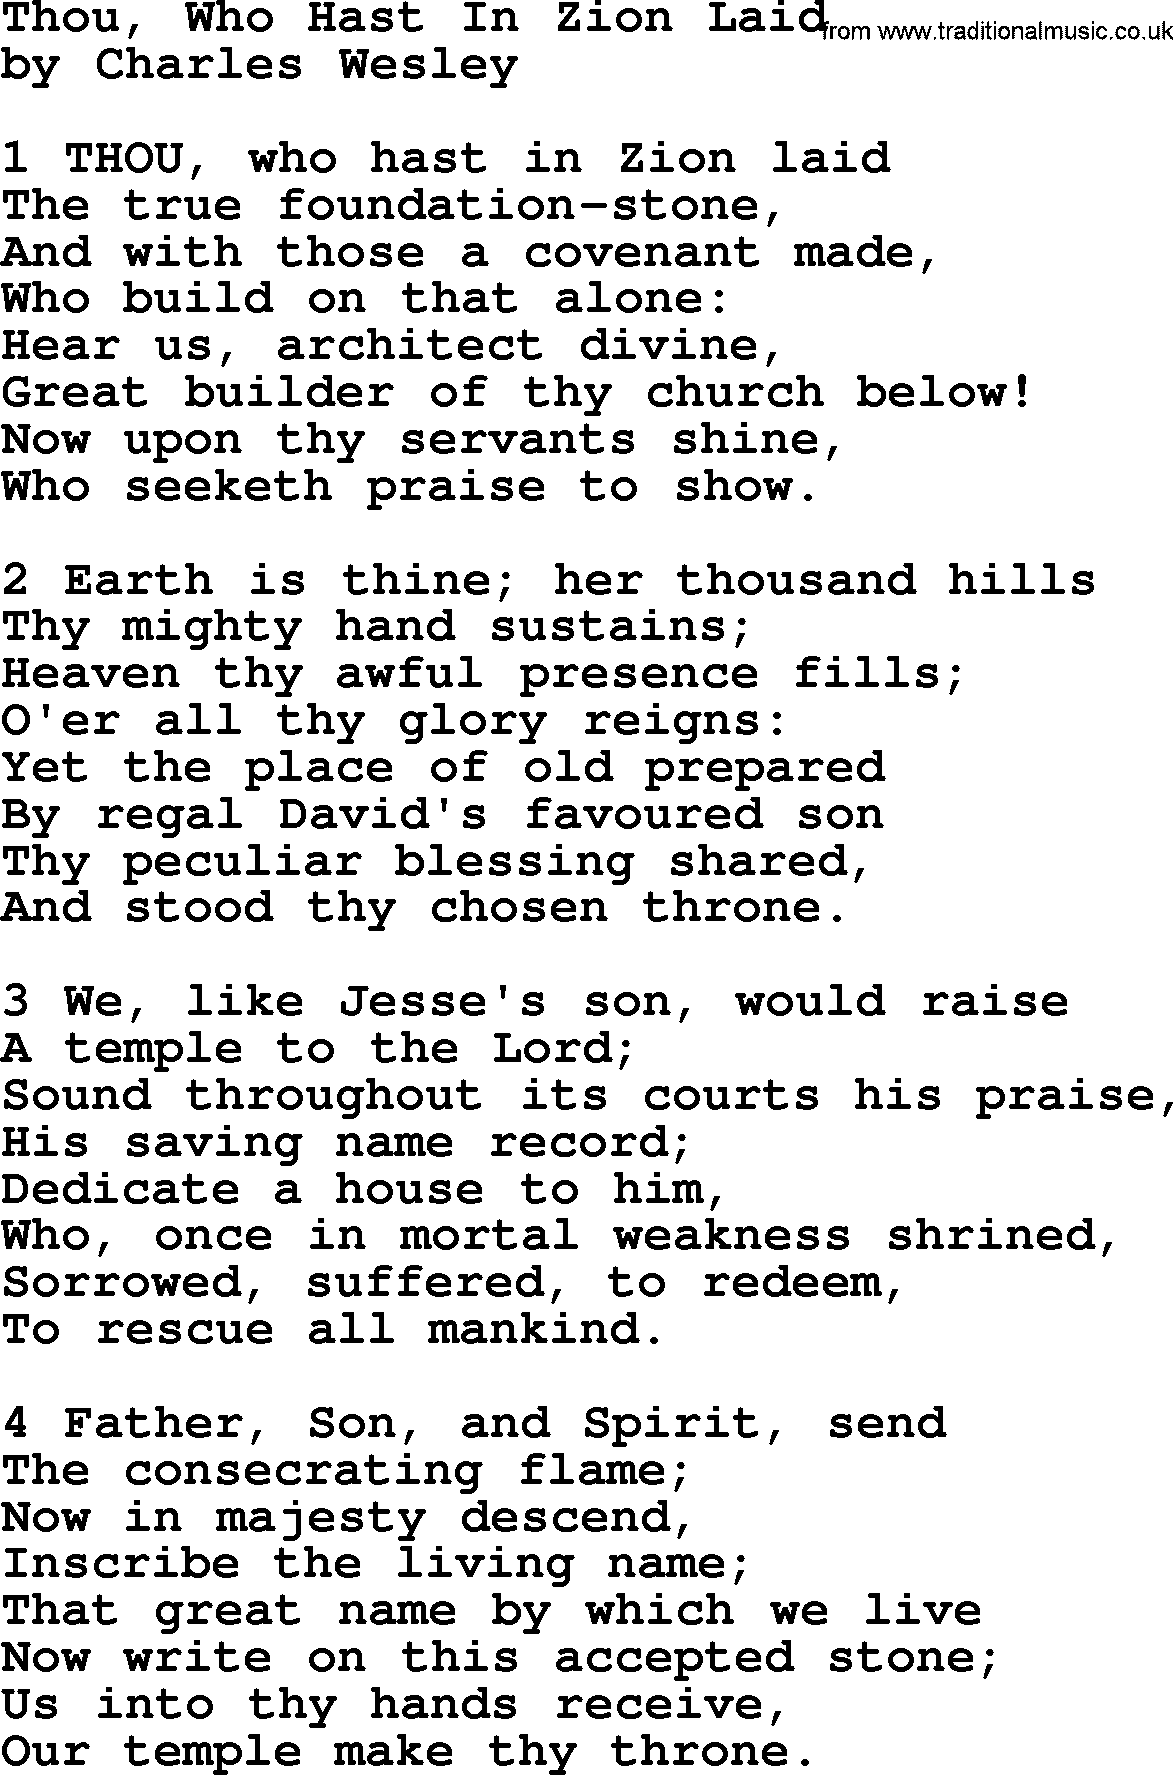 Charles Wesley hymn: Thou, Who Hast In Zion Laid, lyrics